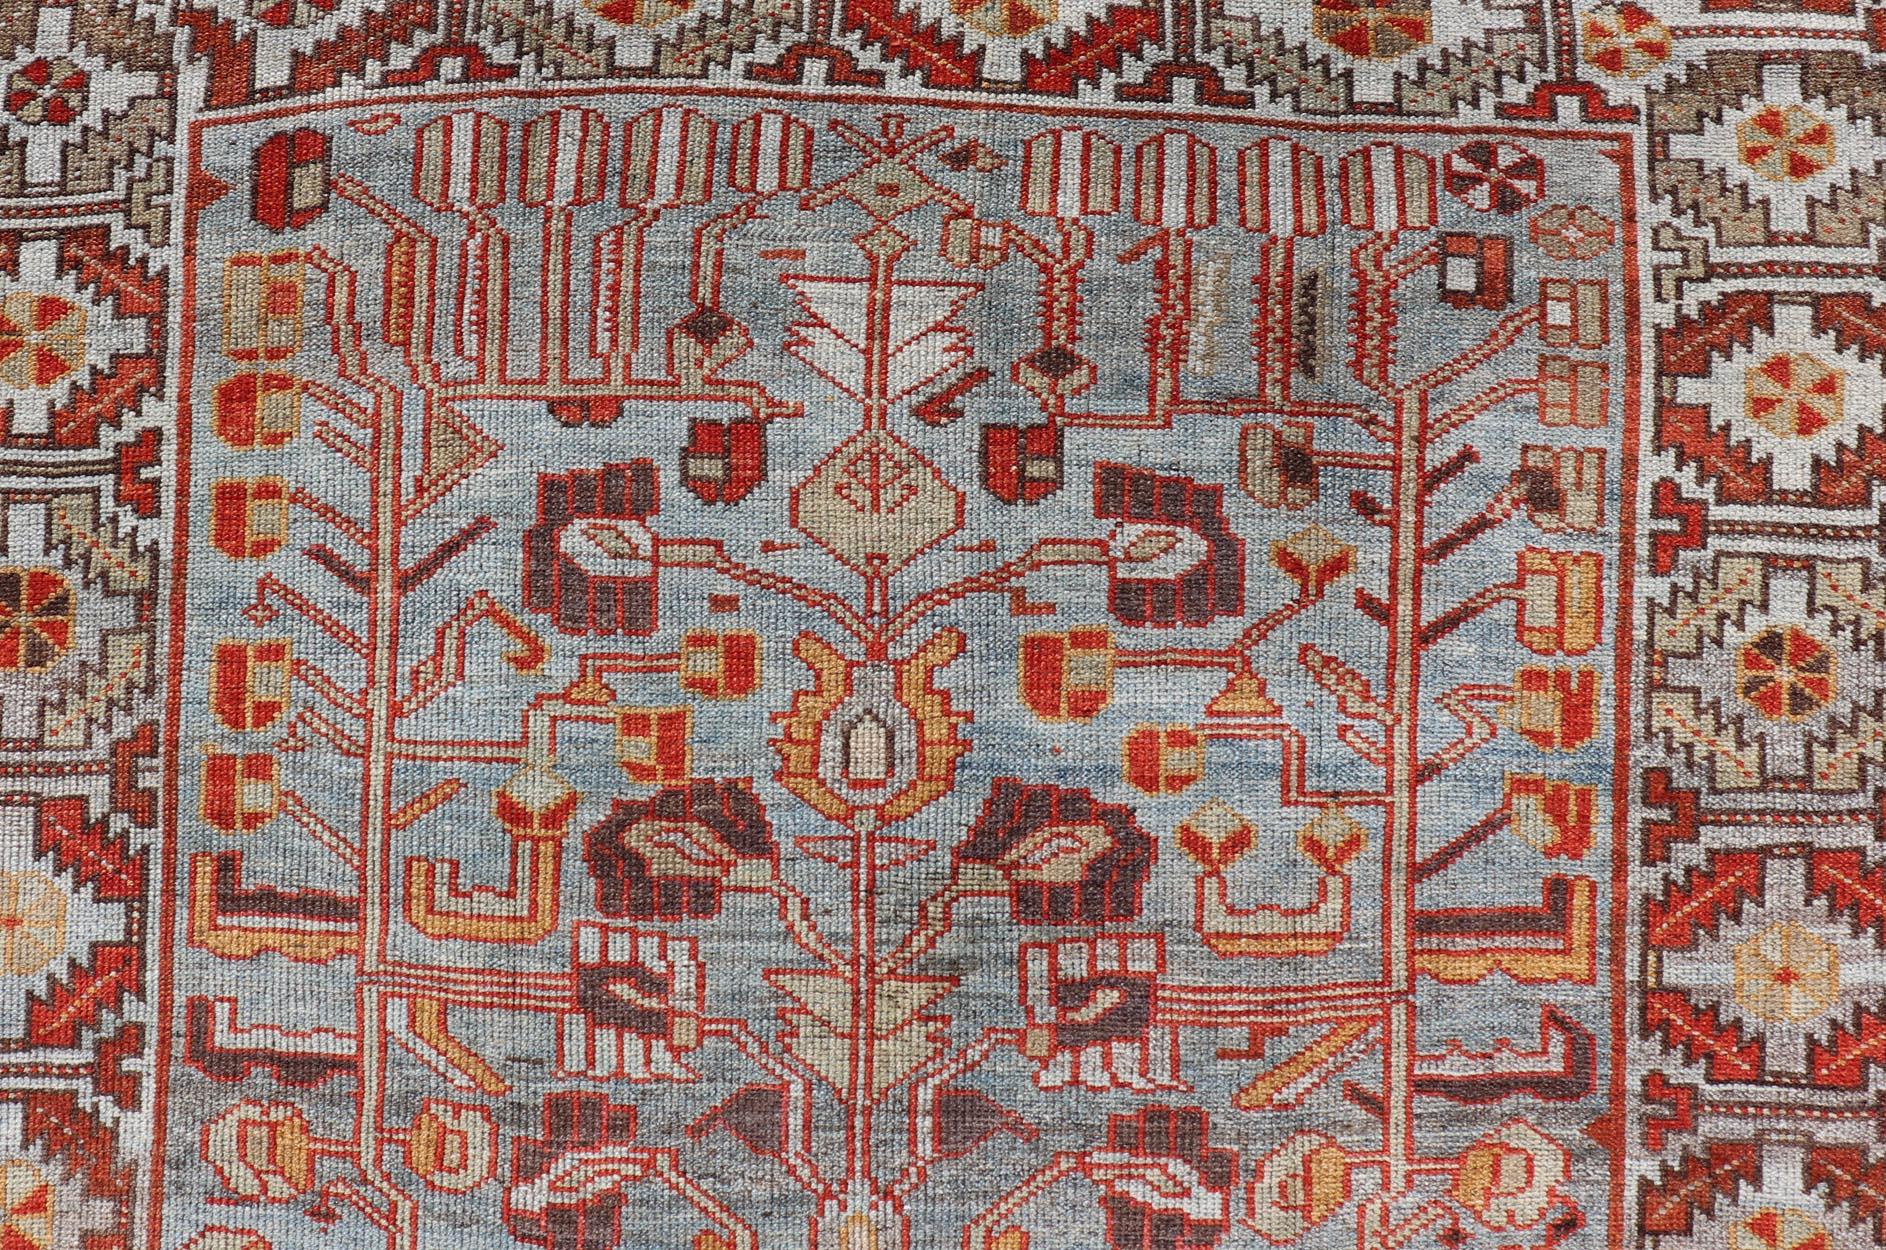 Antique Persian Kurdish Gallery Runner Rug in Wool with Tribal Medallion Design. Keivan Woven Arts; rug EMB-22224-15469, country of origin / type: Iran / Kurdish, circa 1900.
Measures: 4'11 x 11'9 
This antique Persian Kurdish rug has been